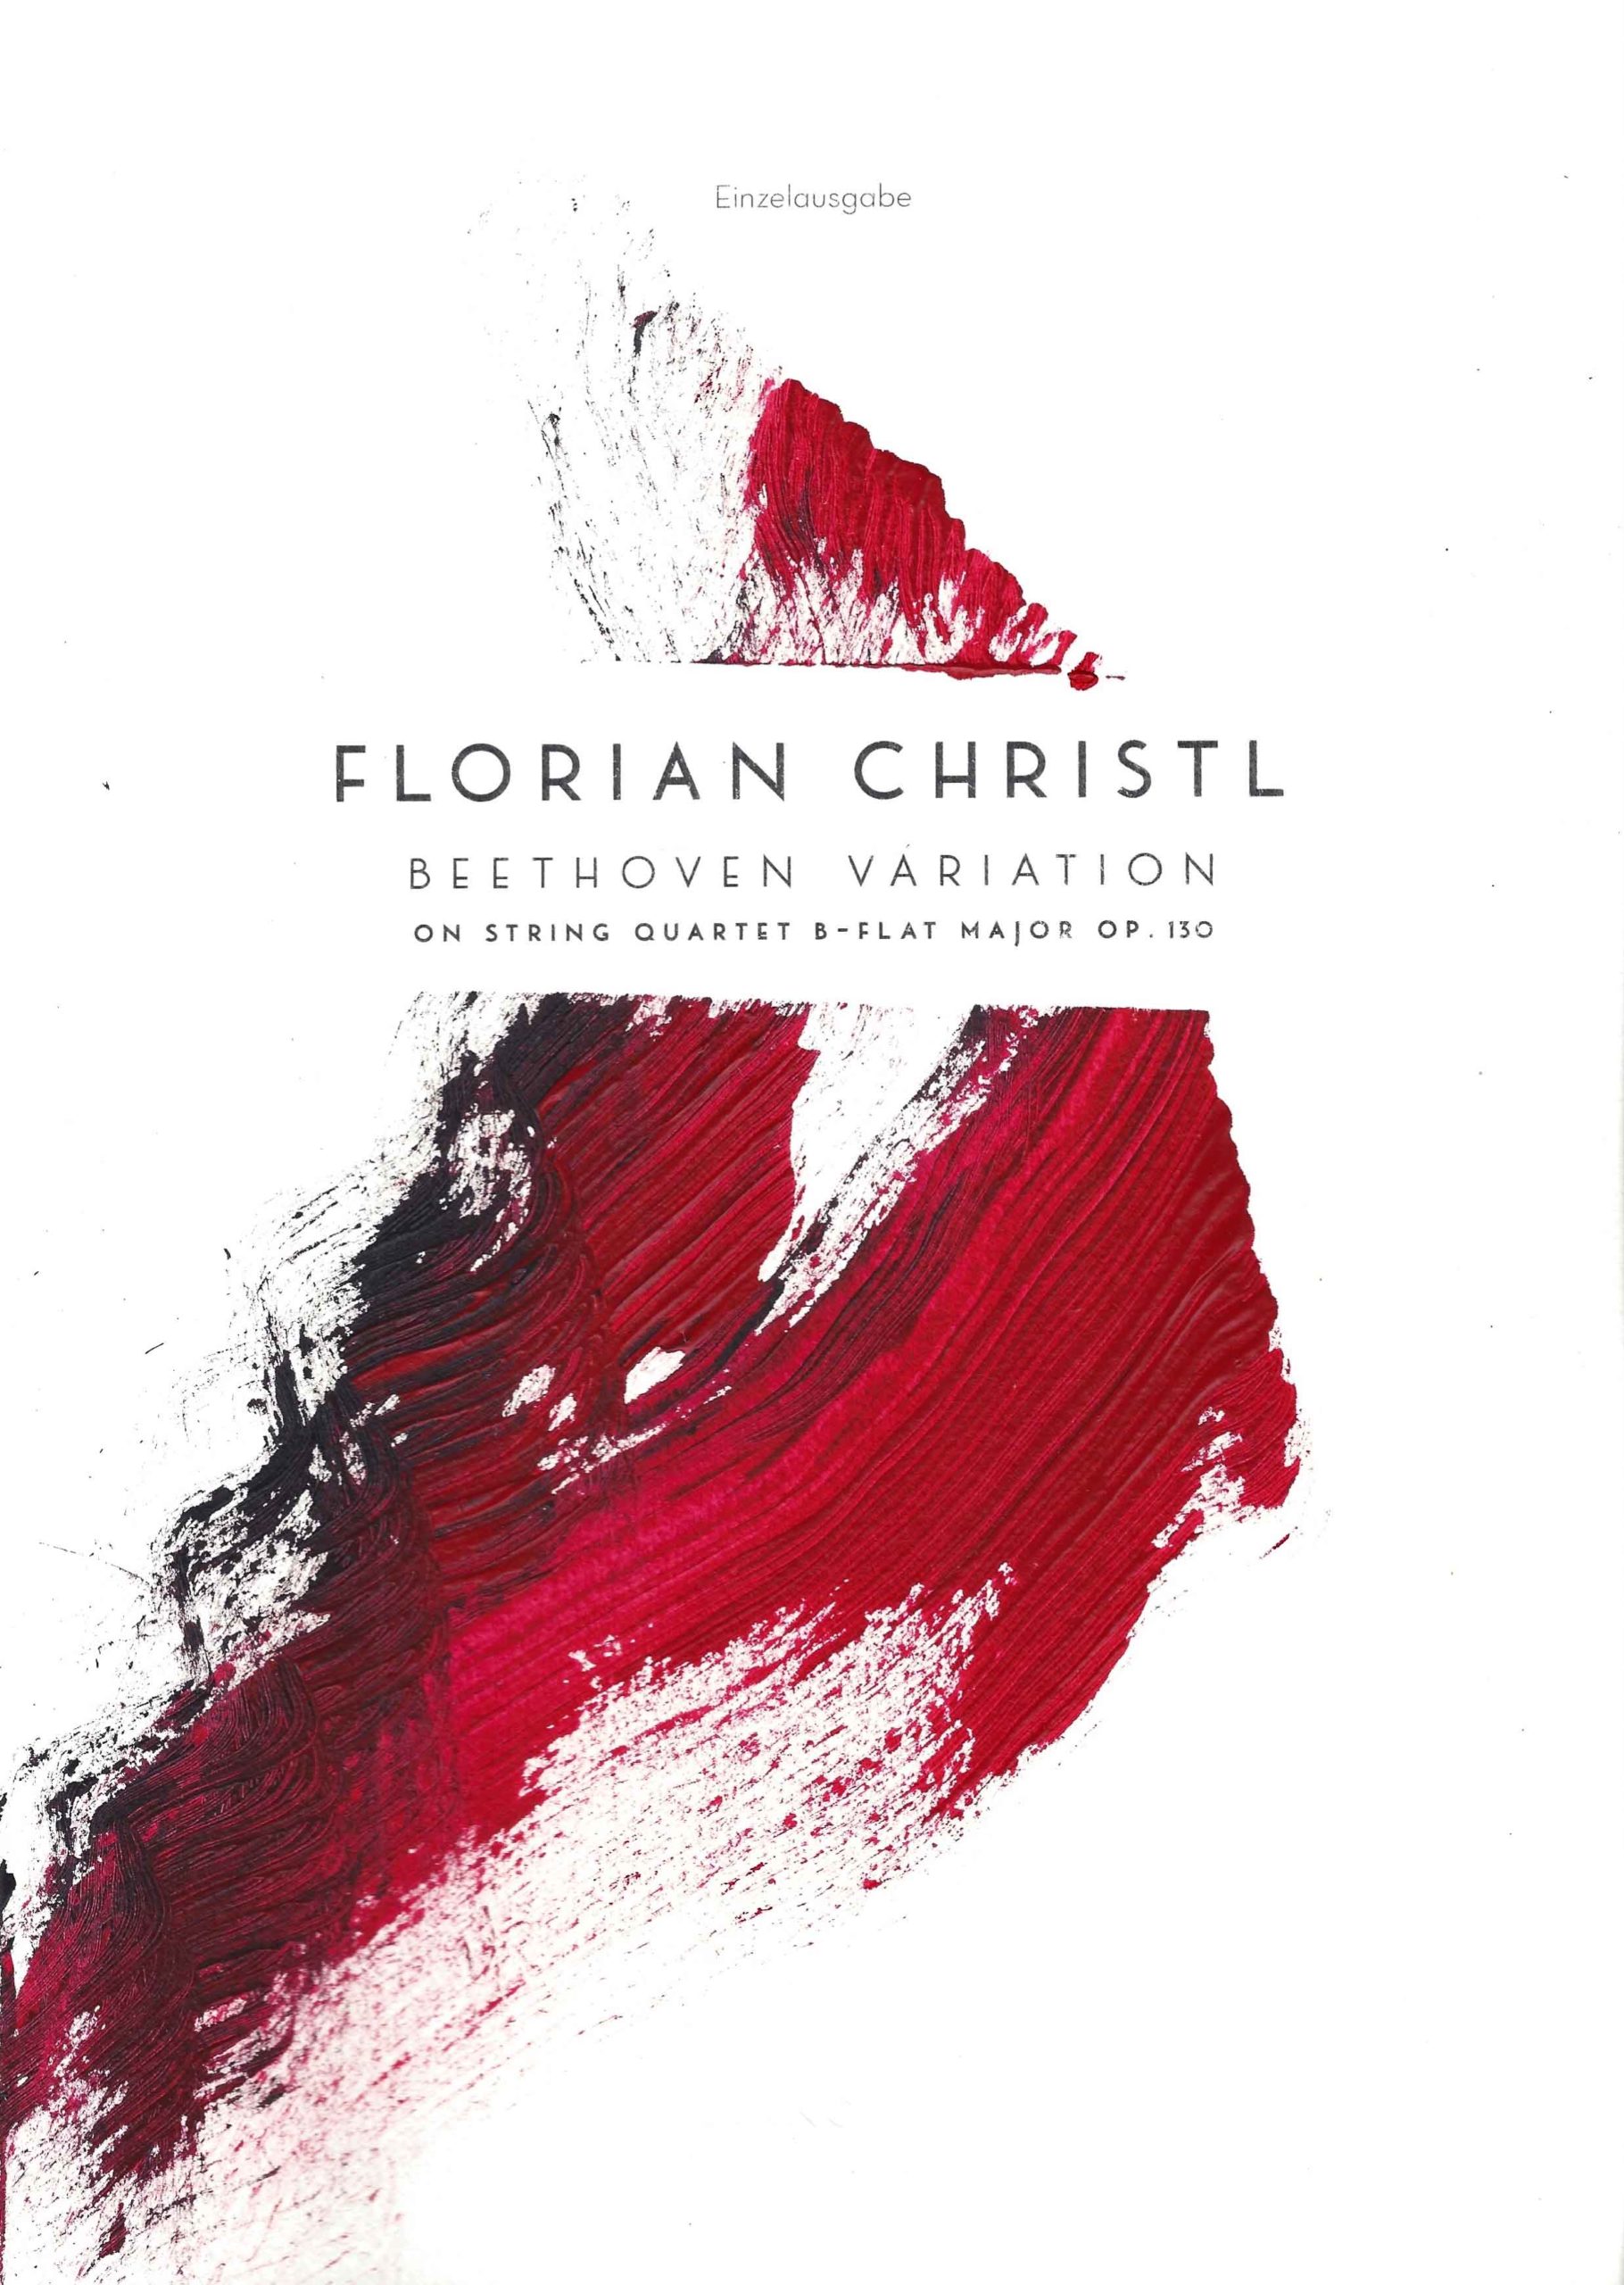 Beethoven Variation - Florian Christl Sheet Music 051